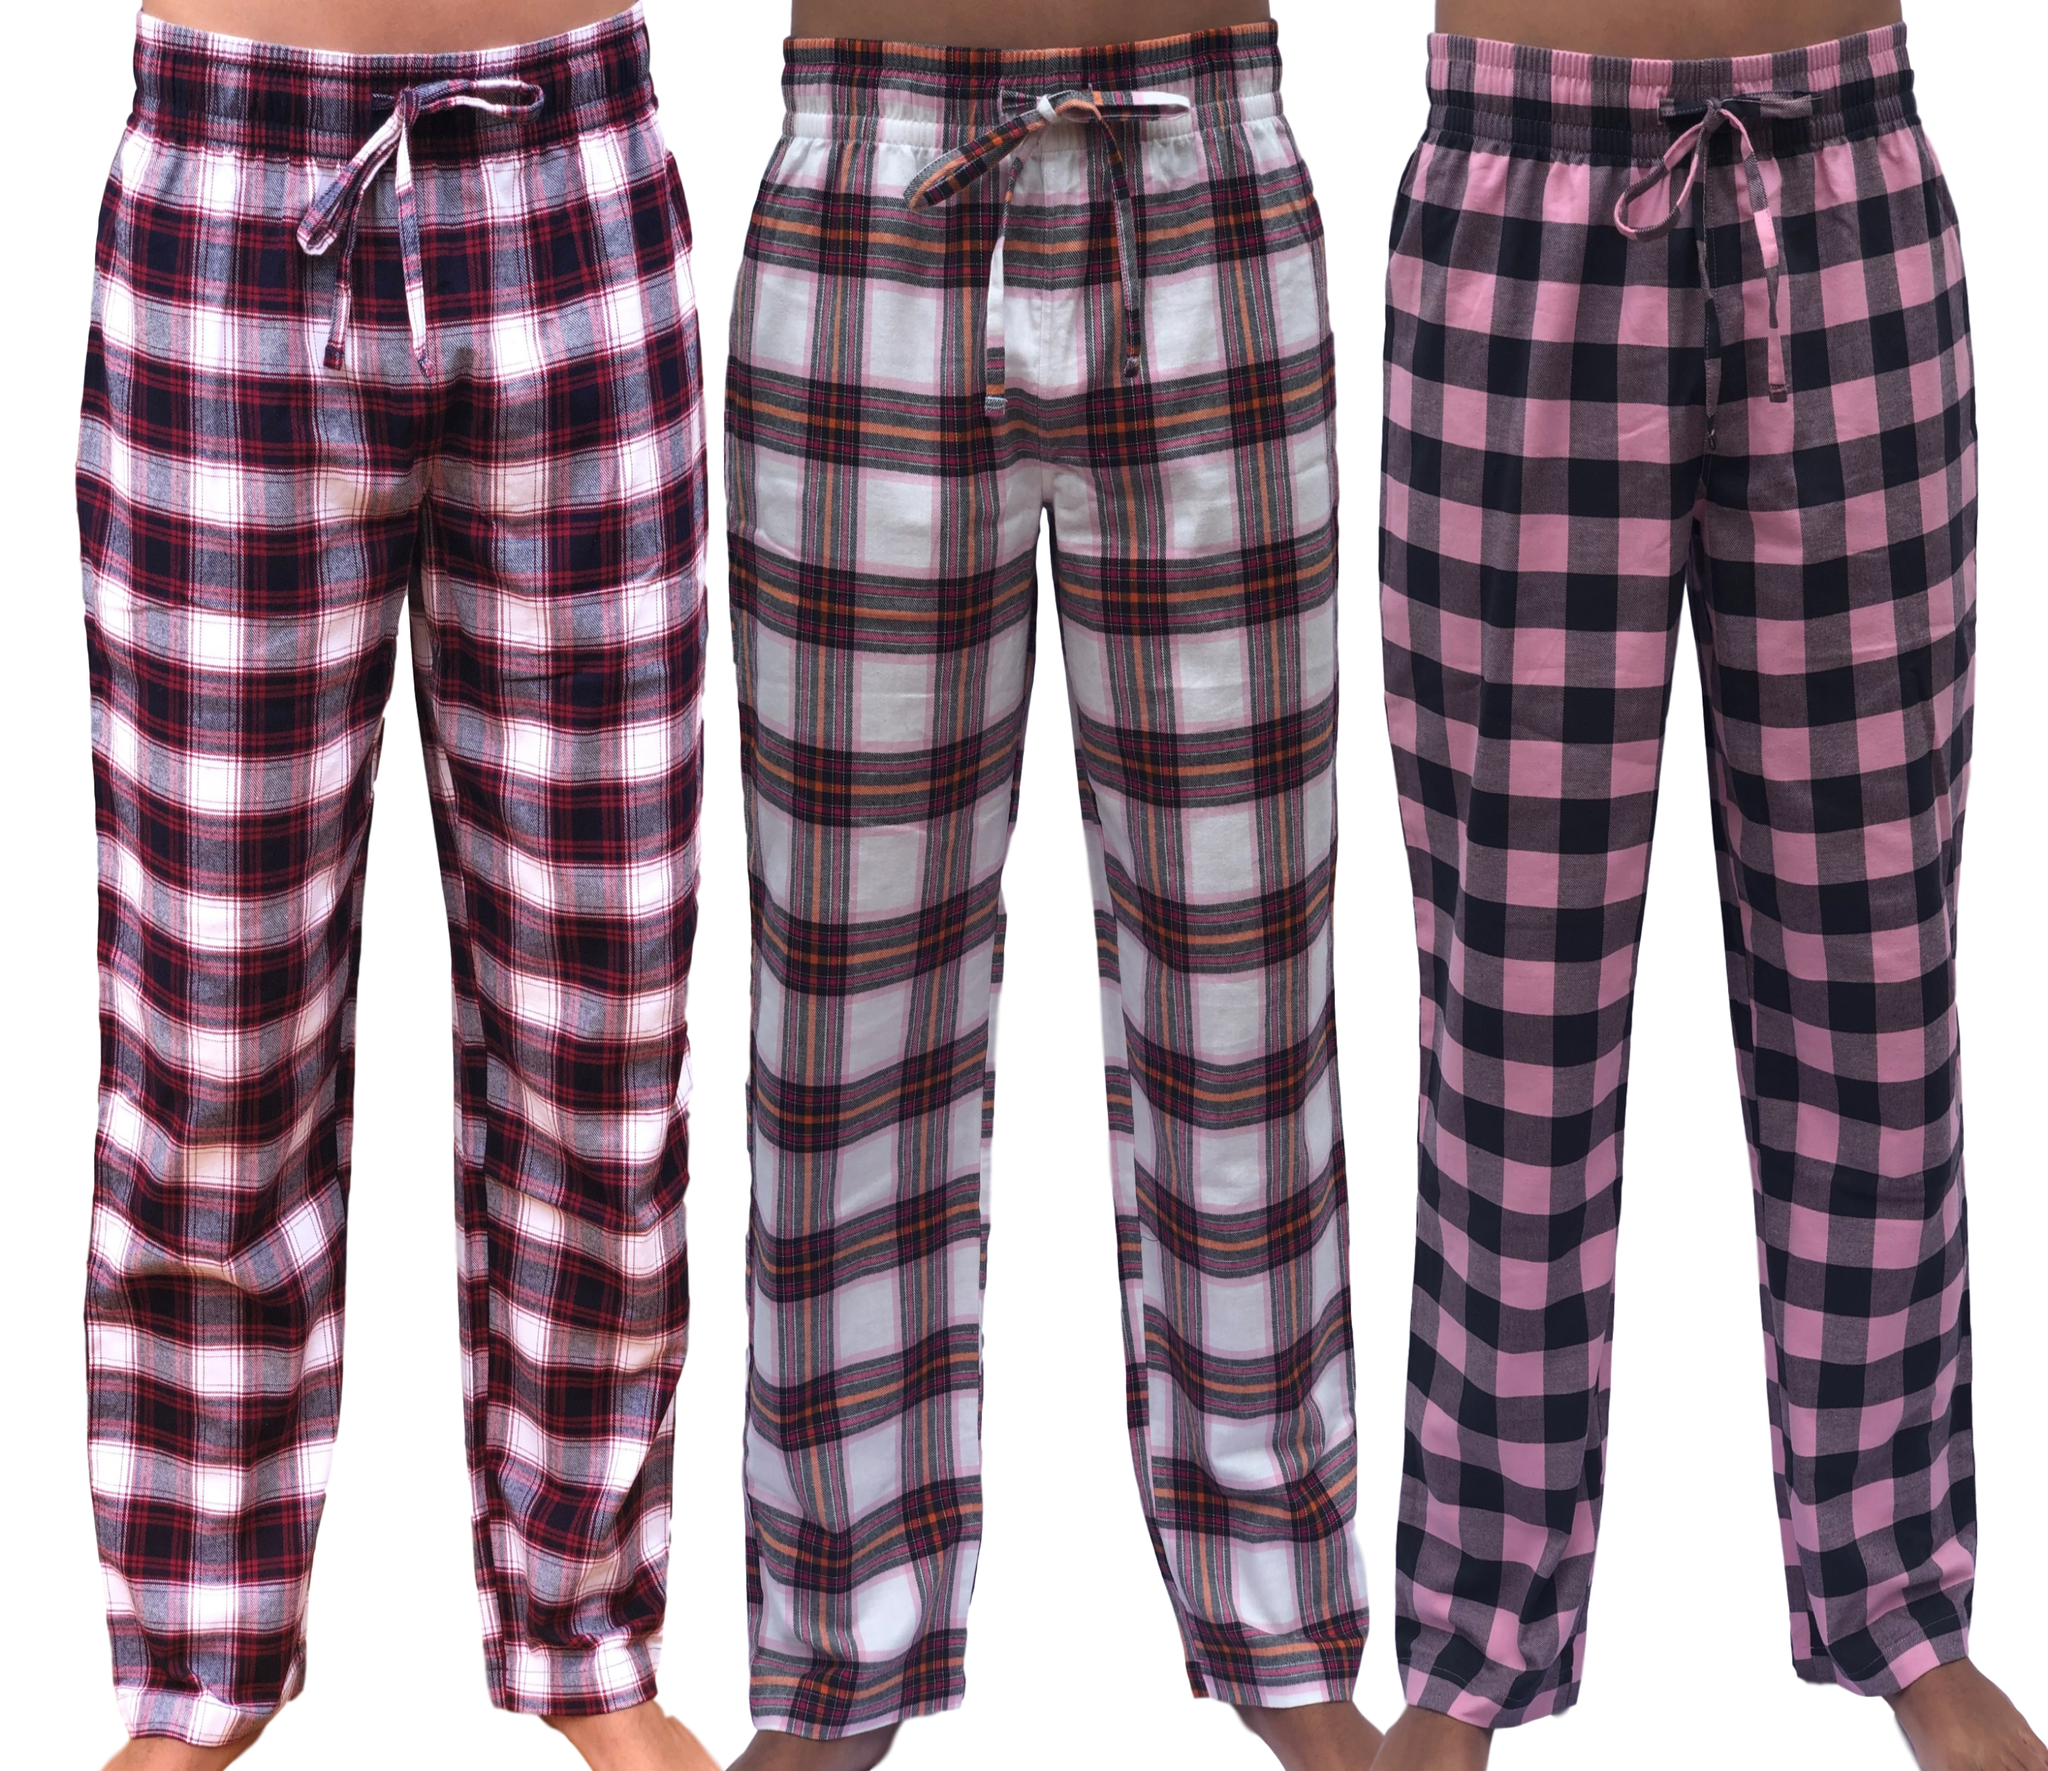 GIVEITPRO 3 Pack - Ladies Flannel Pajama Pant Pajama Bottoms-100